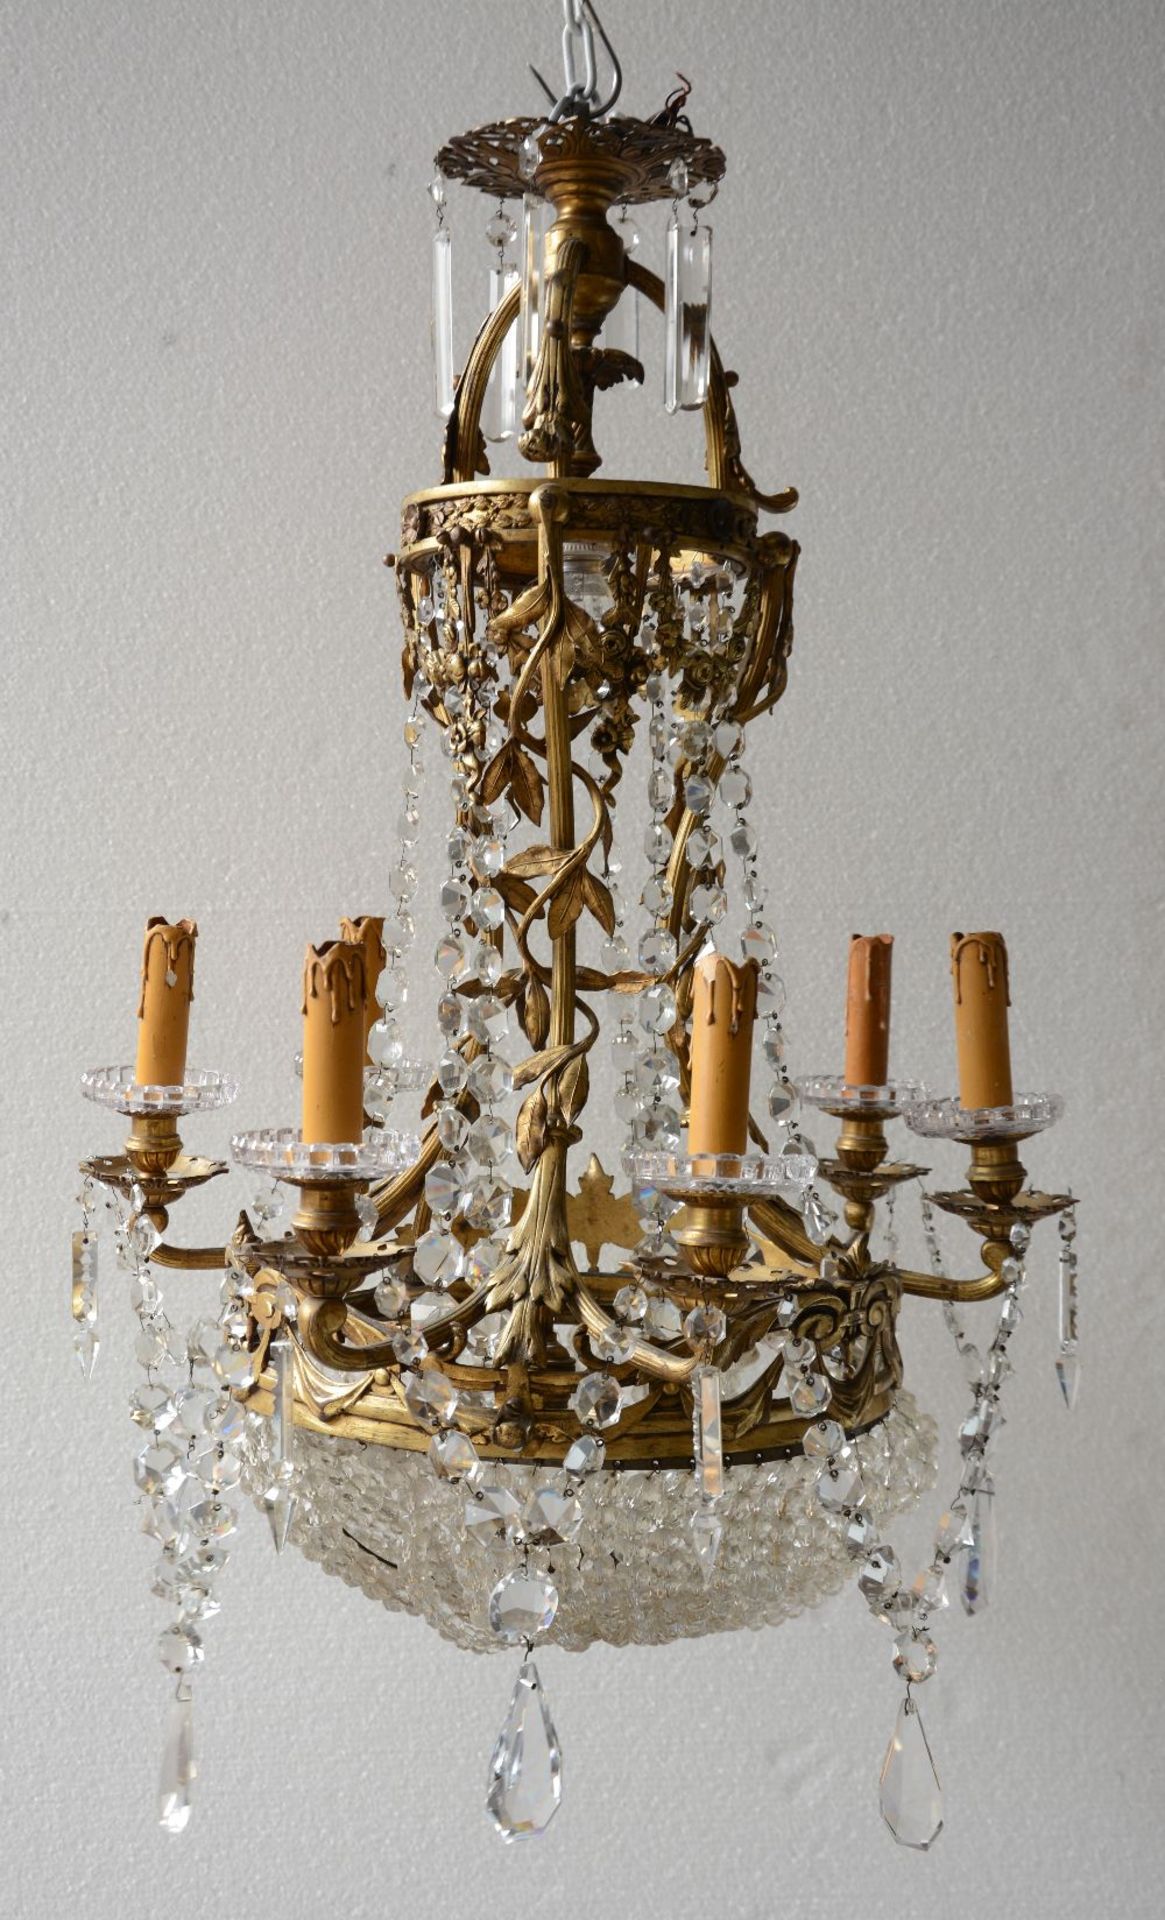 A 19thC Neo-classical sac à perles chandelier with gilt bronze mounts, H 90 - Diameter 60 cm